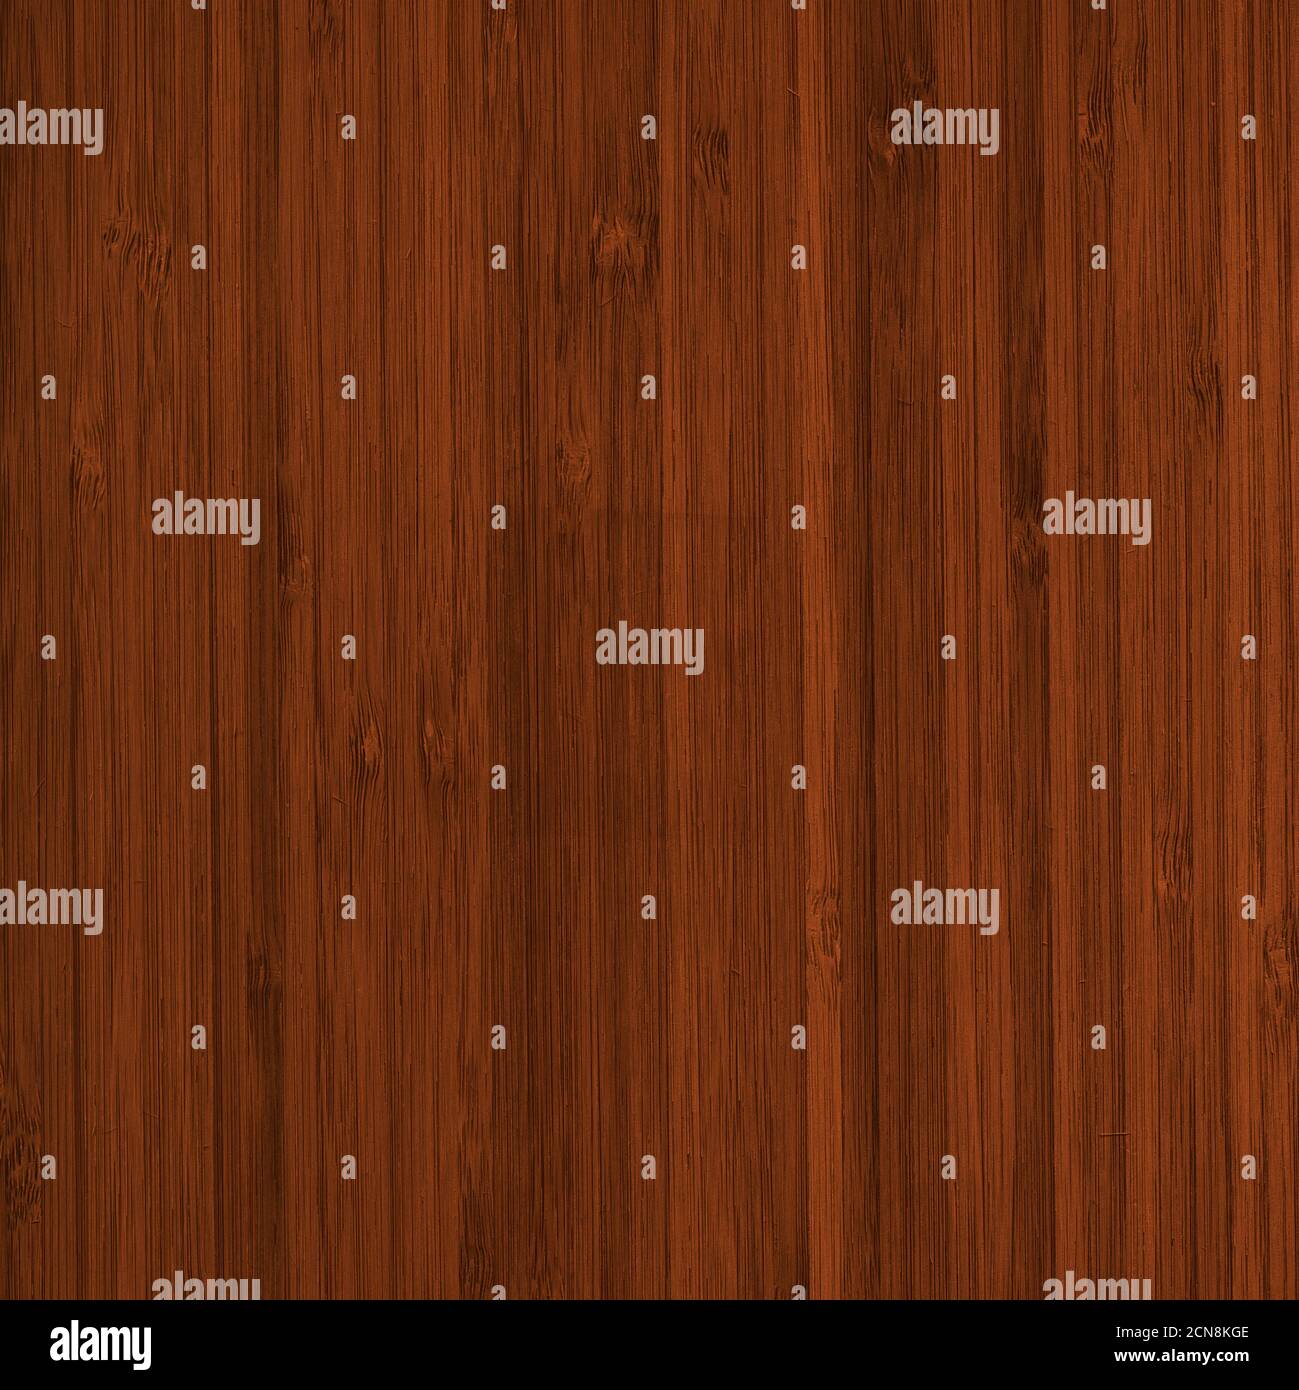 Clean teak wood texture background Stock Photo - Alamy